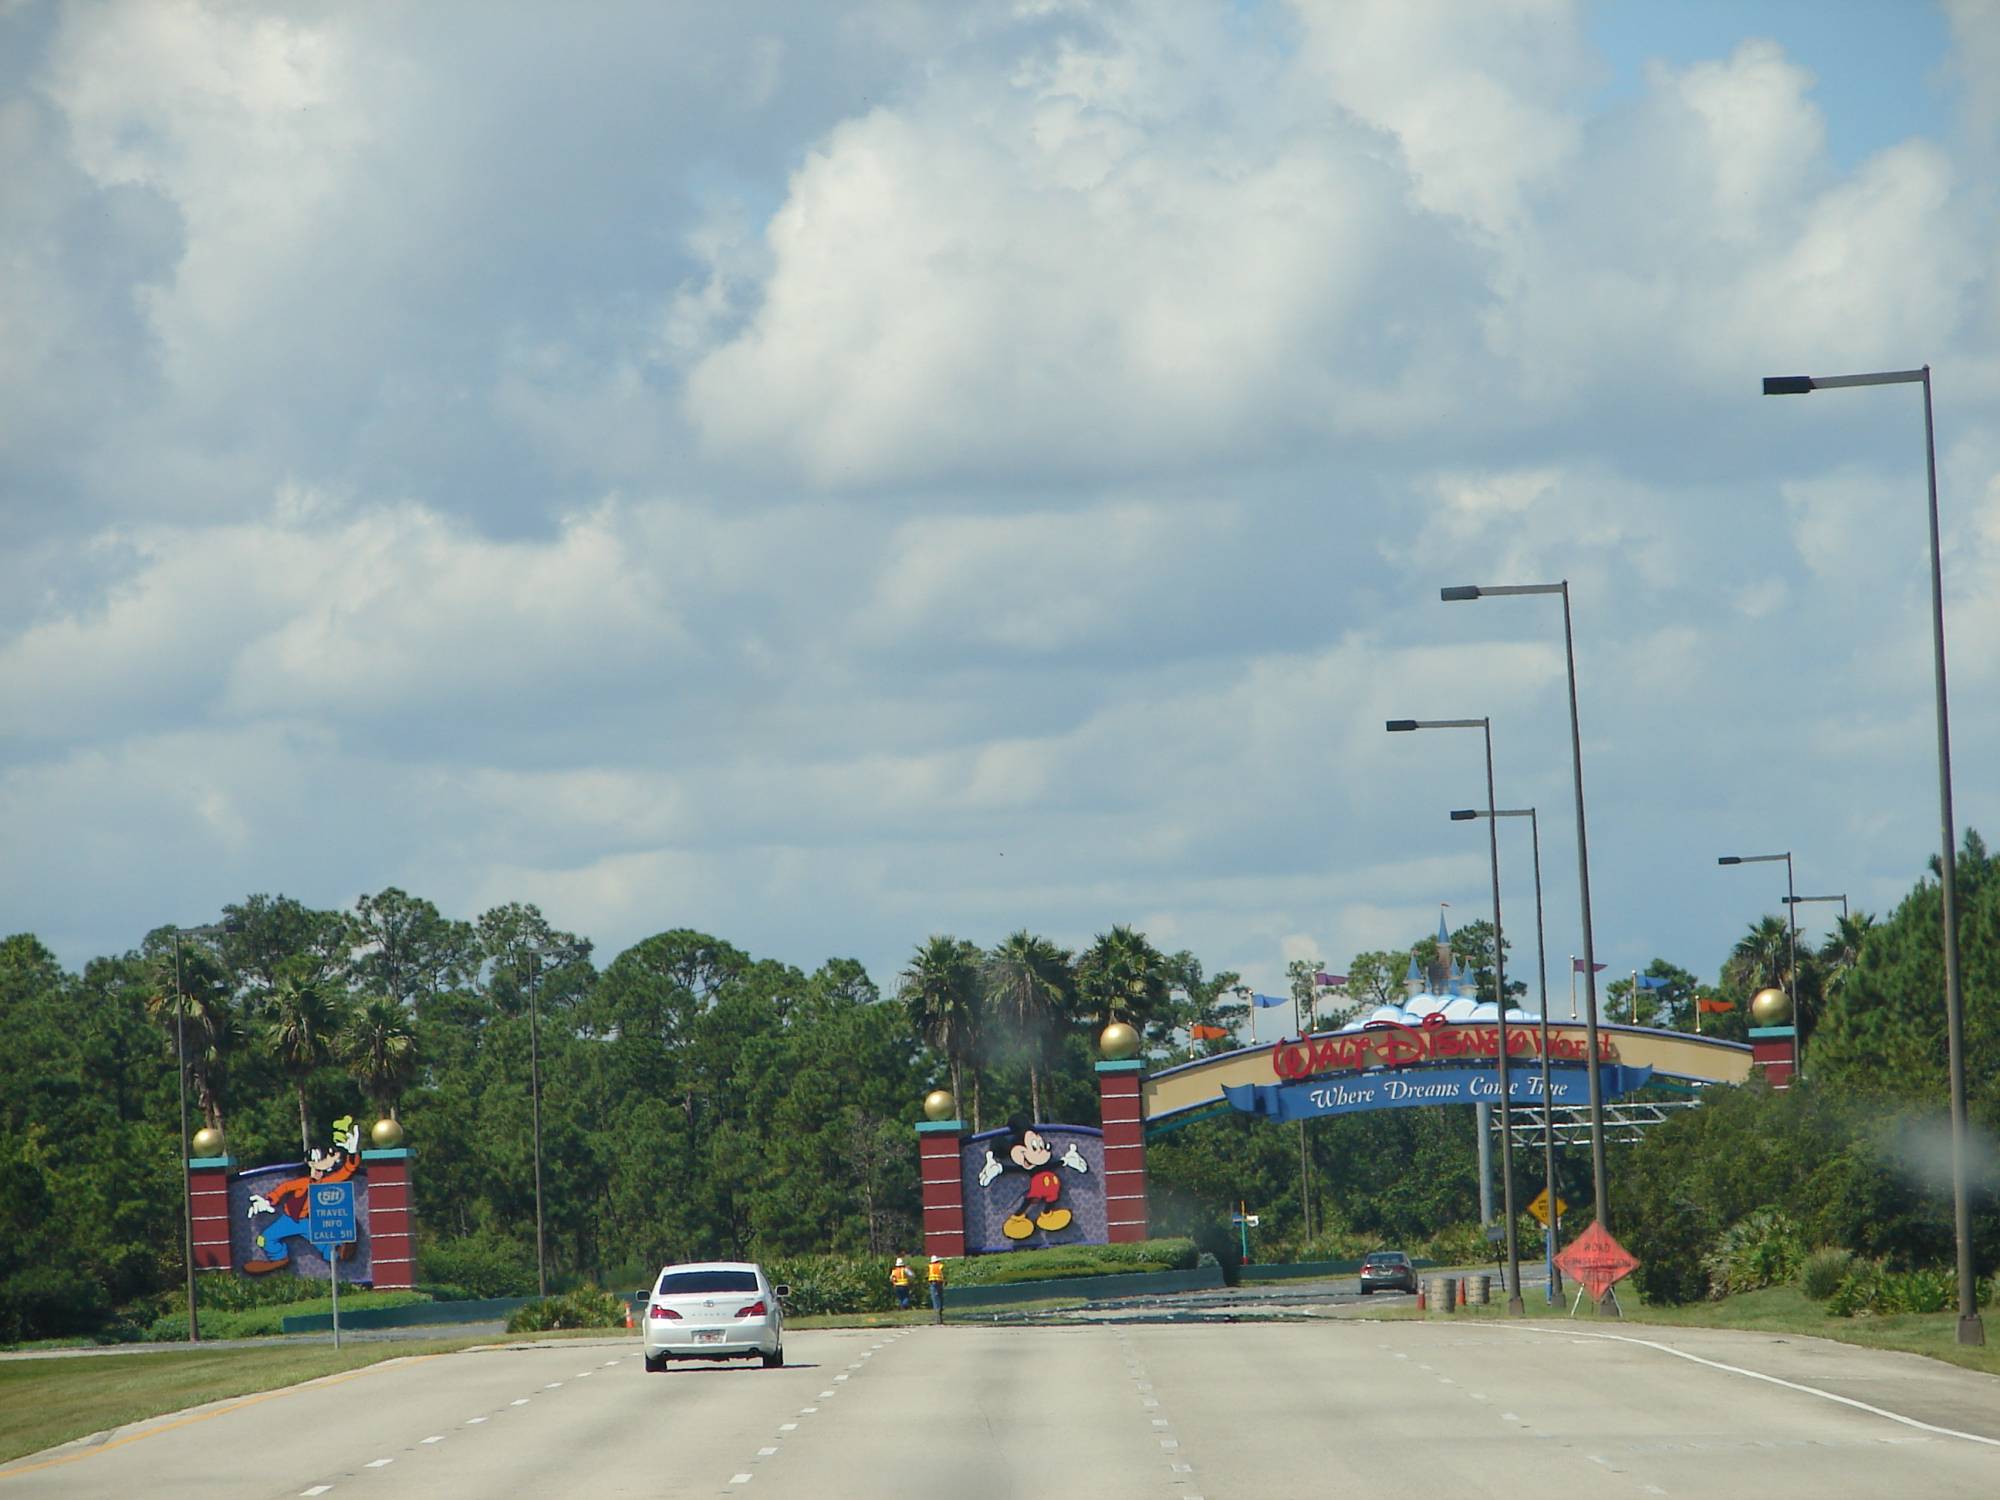 Walt Disney World Entrance Sign